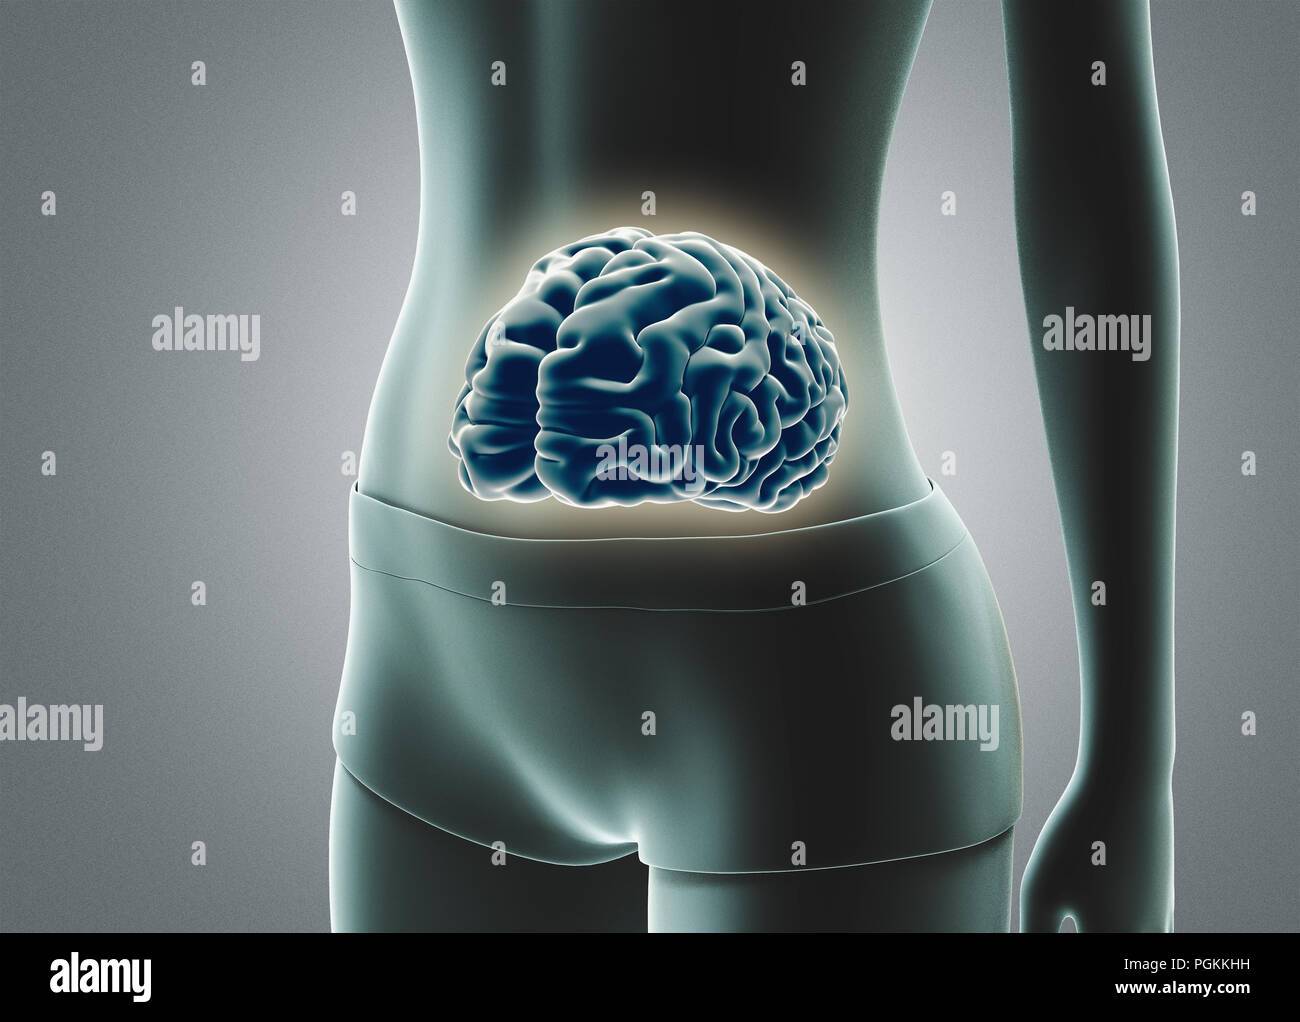 Human brain in stomach, 3d render illustration Stock Photo